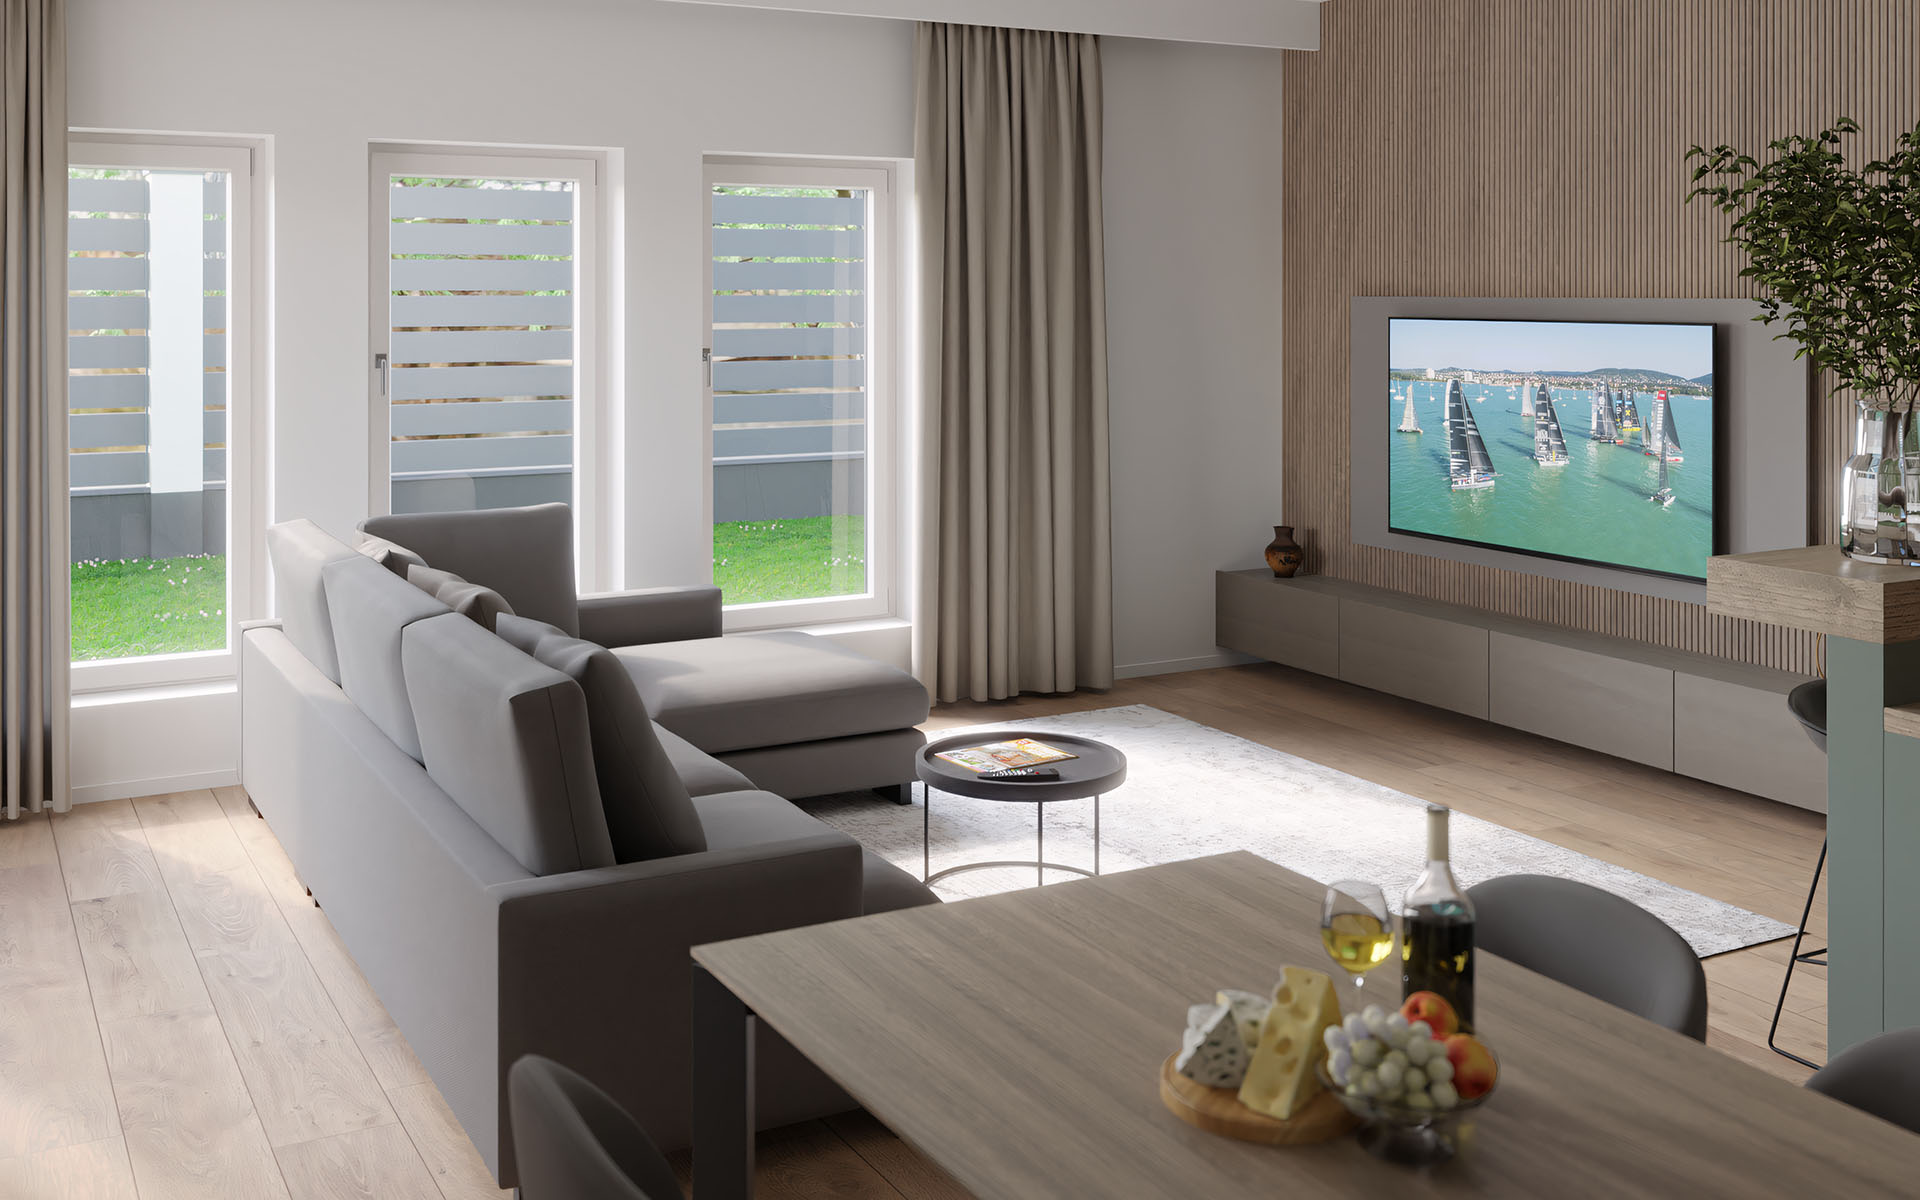 Modern, Comfortable, Stylish Living Space